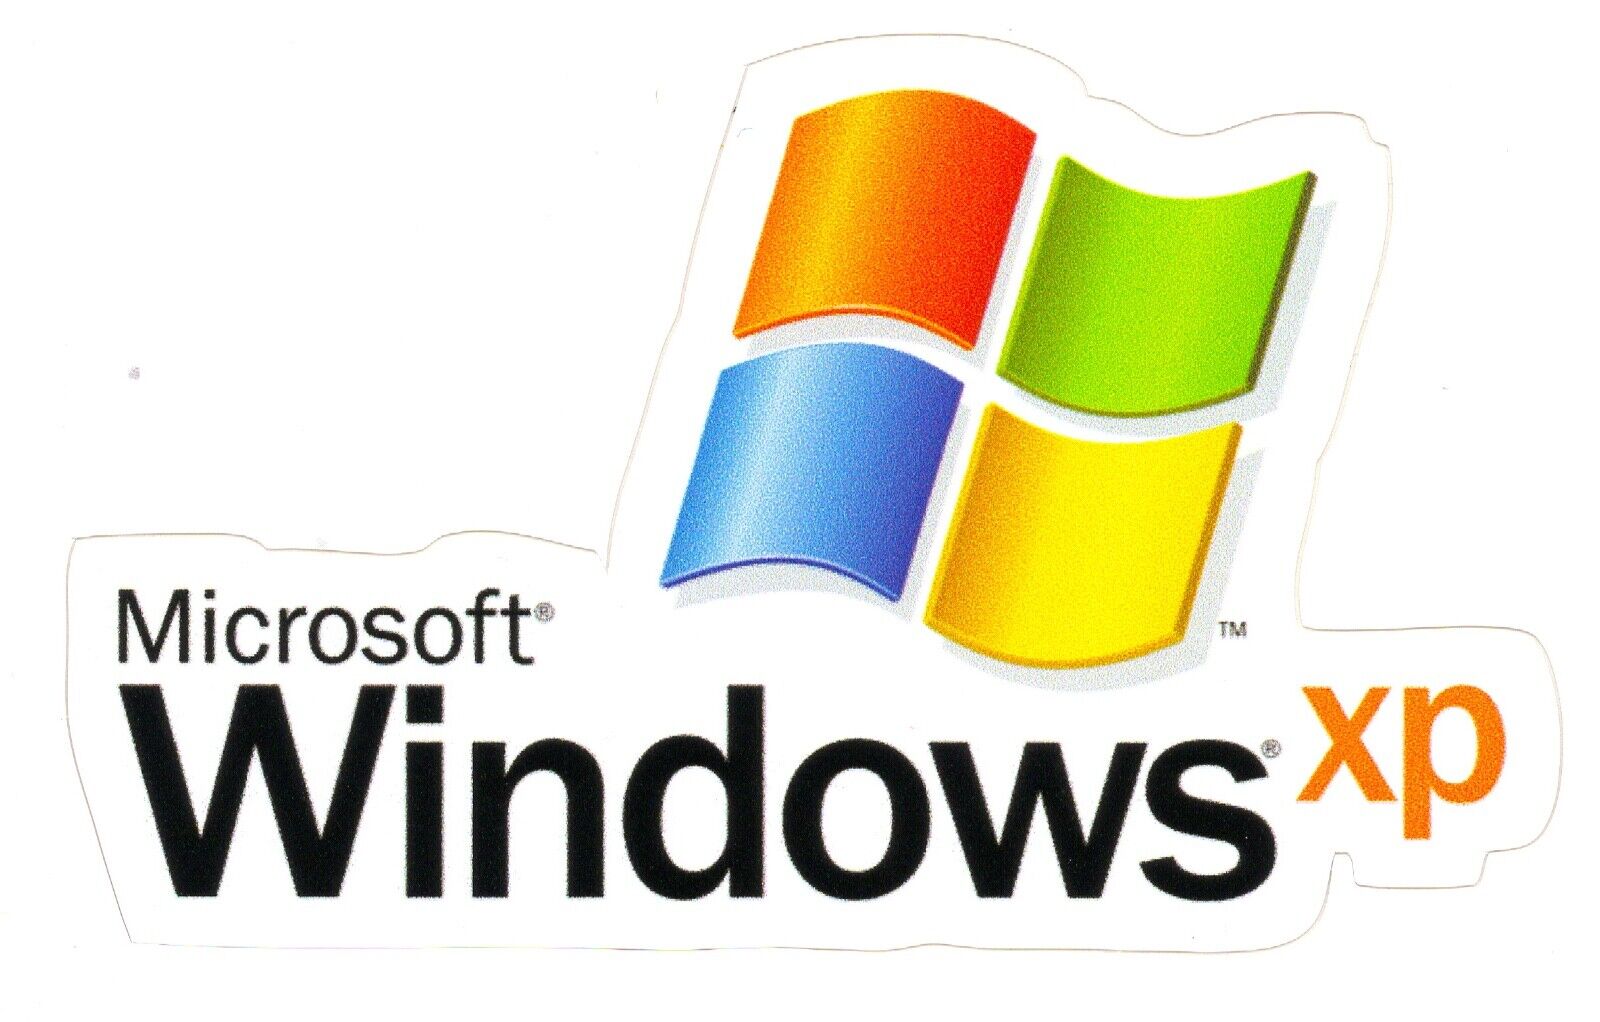 Microsoft Windows XP - Logo Sticker (Reproduction)